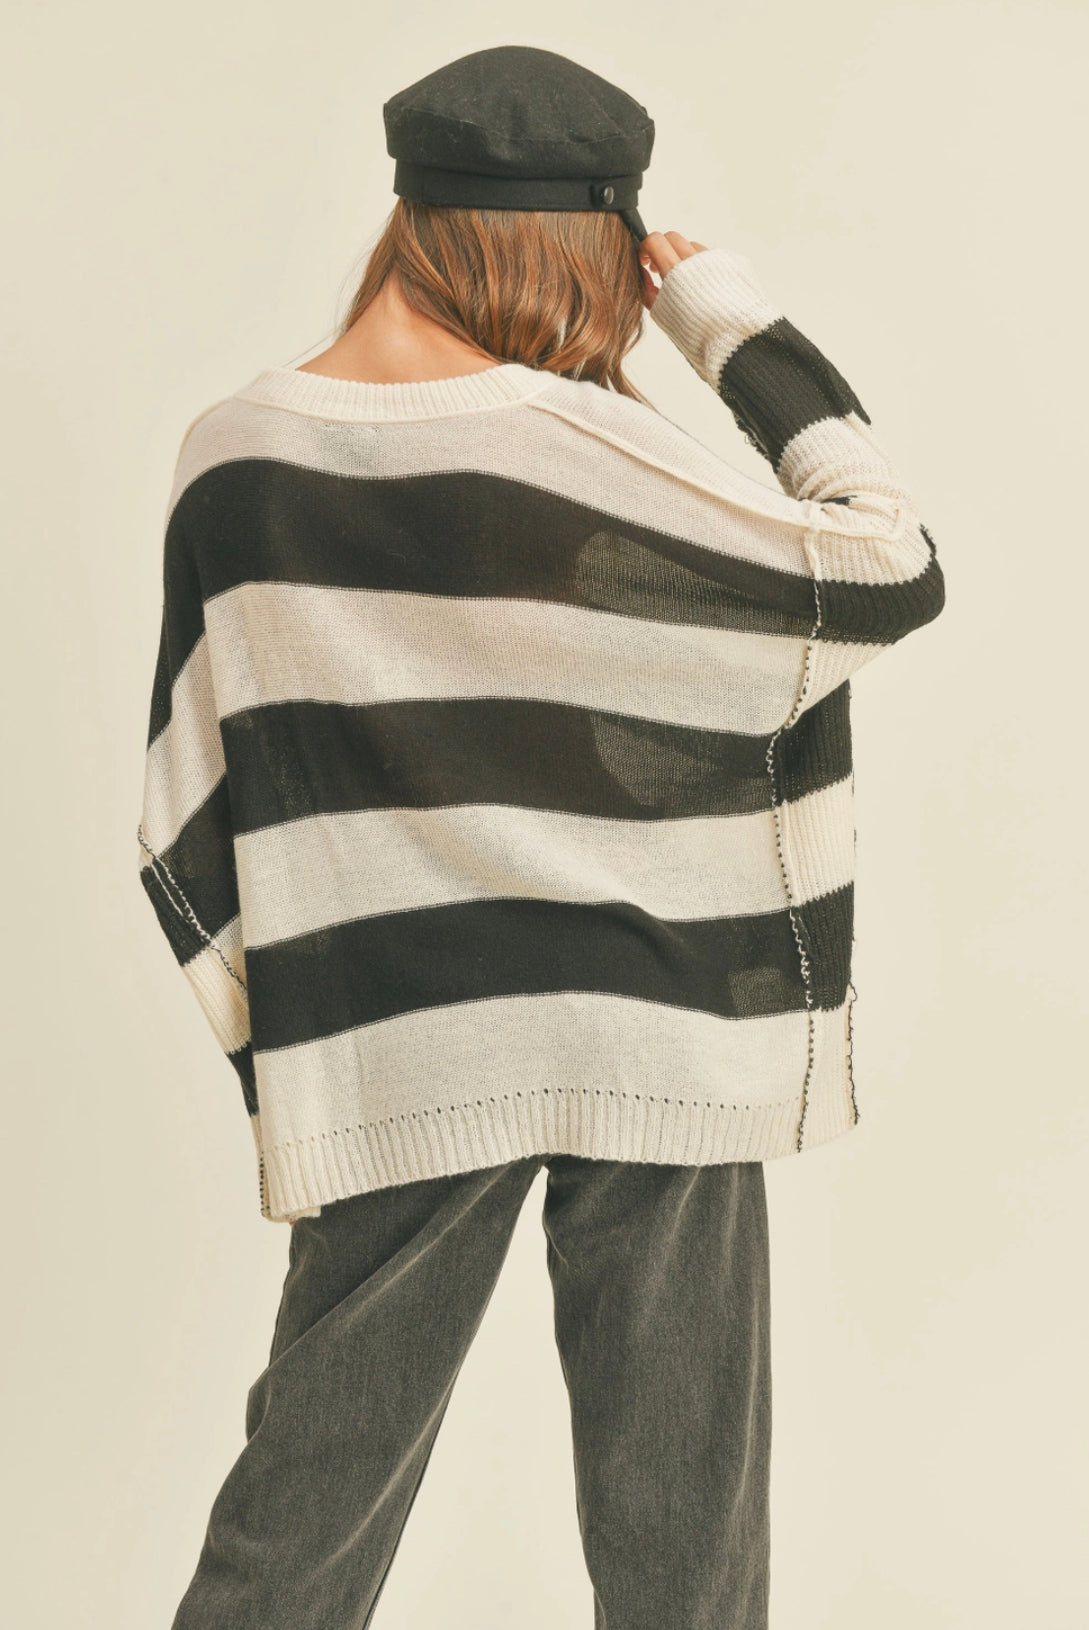 Tori Black Stripped Sweater